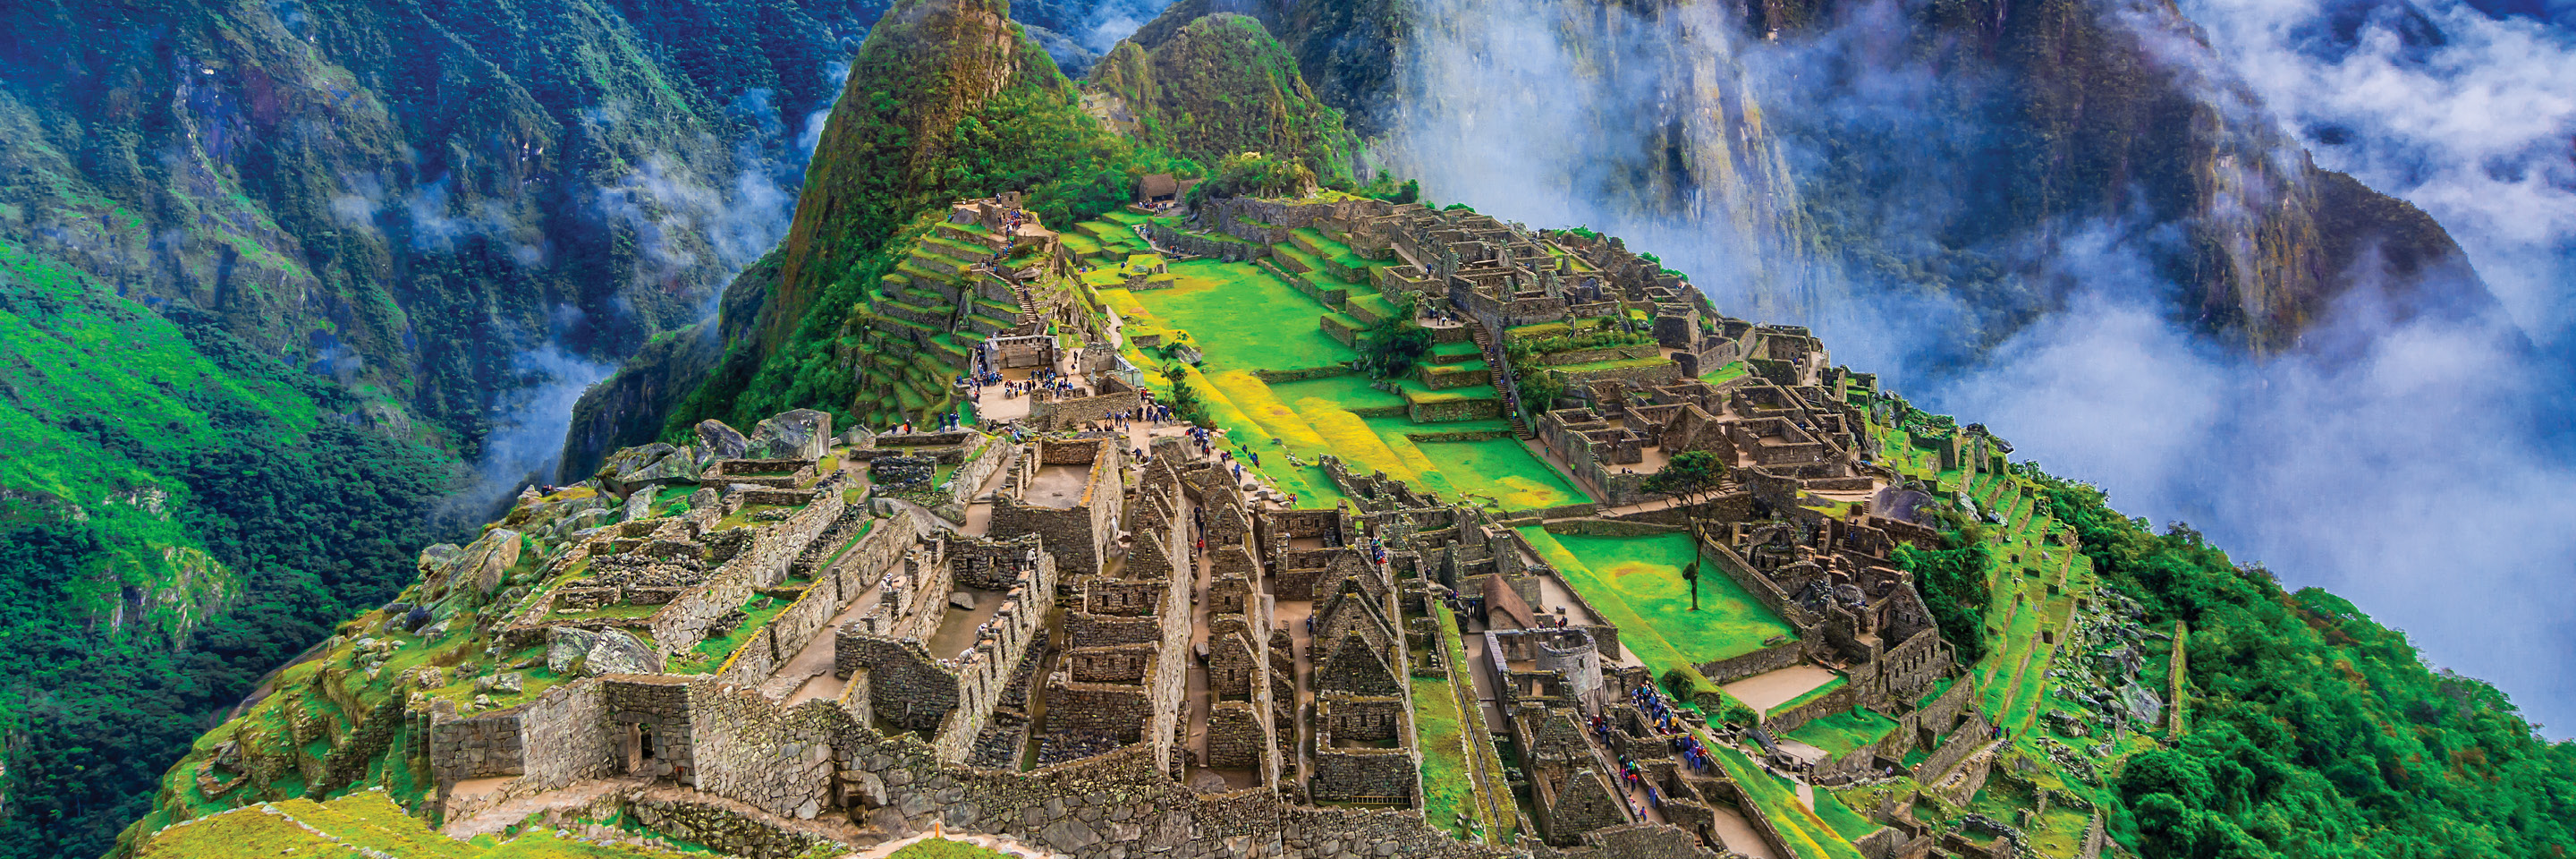 I. Introduction to Machu Picchu